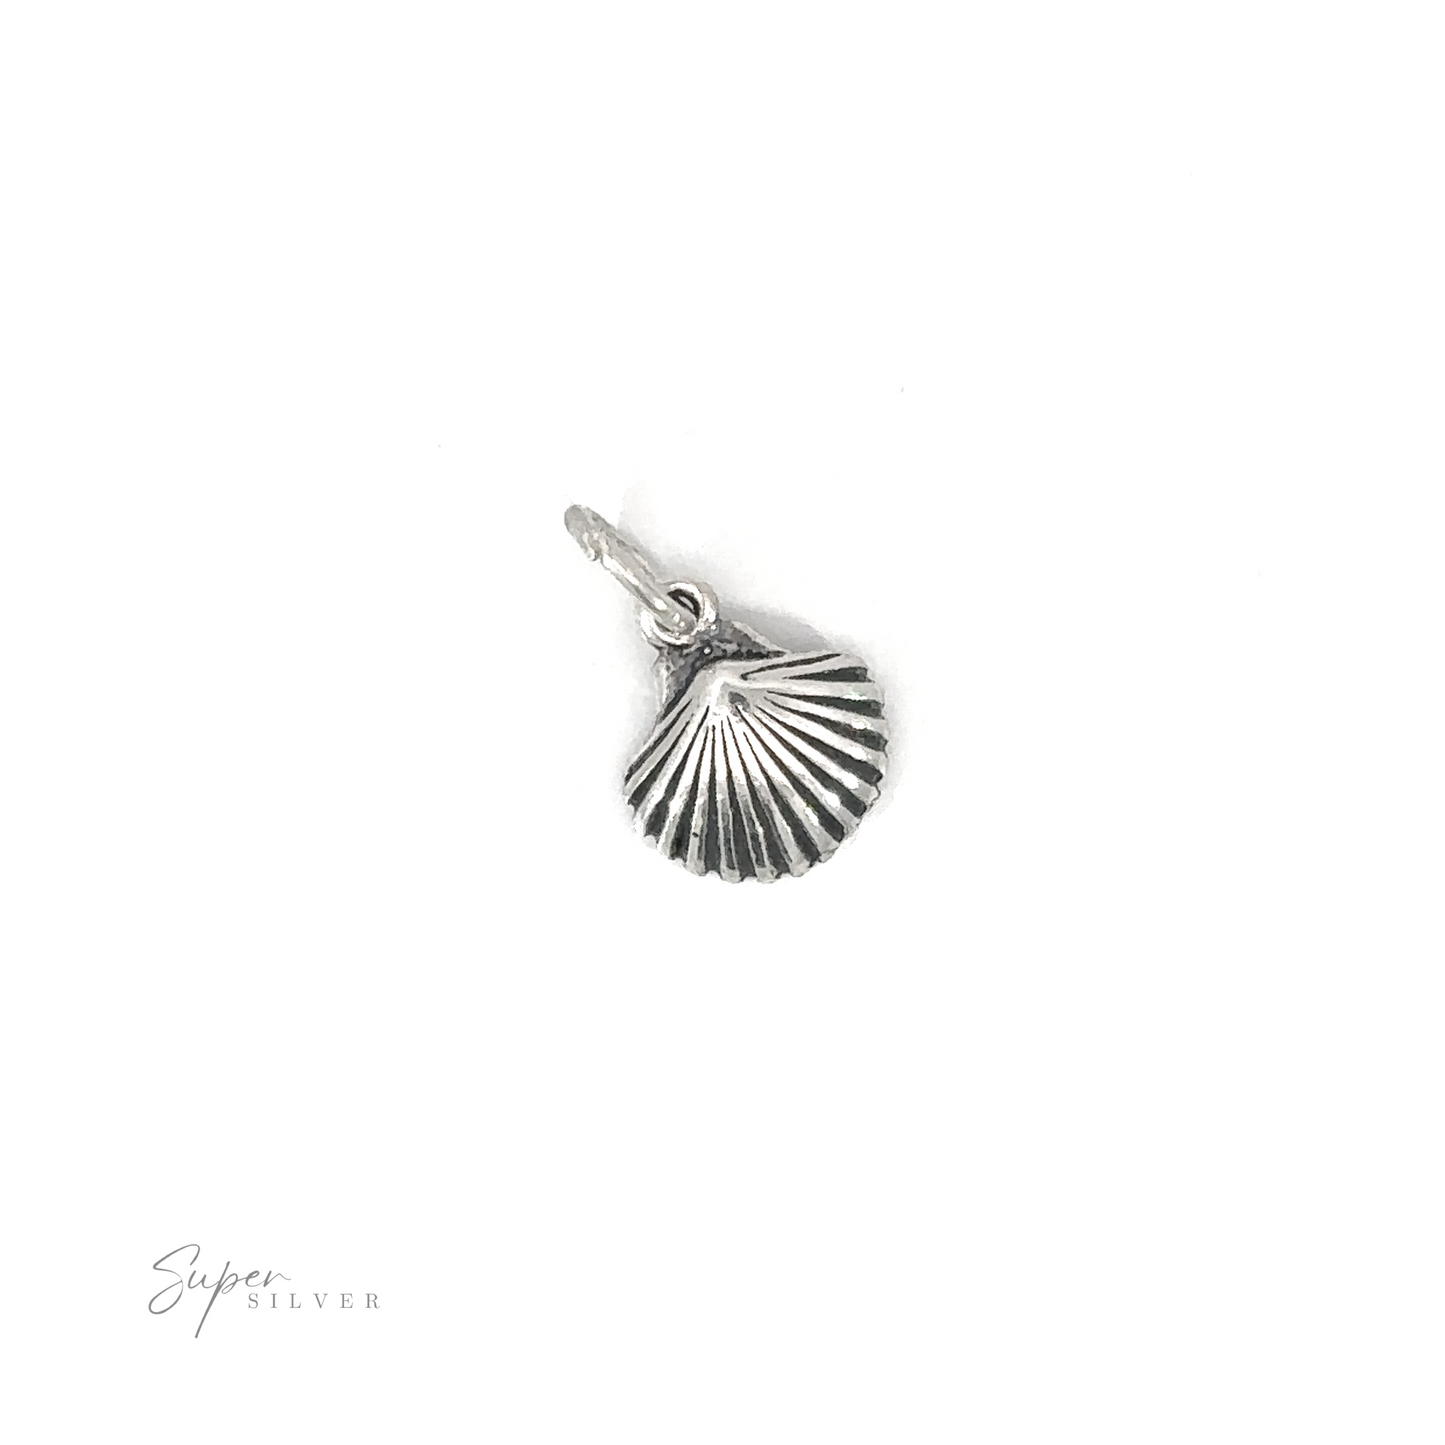 Seashell Charm pendant on a white background.